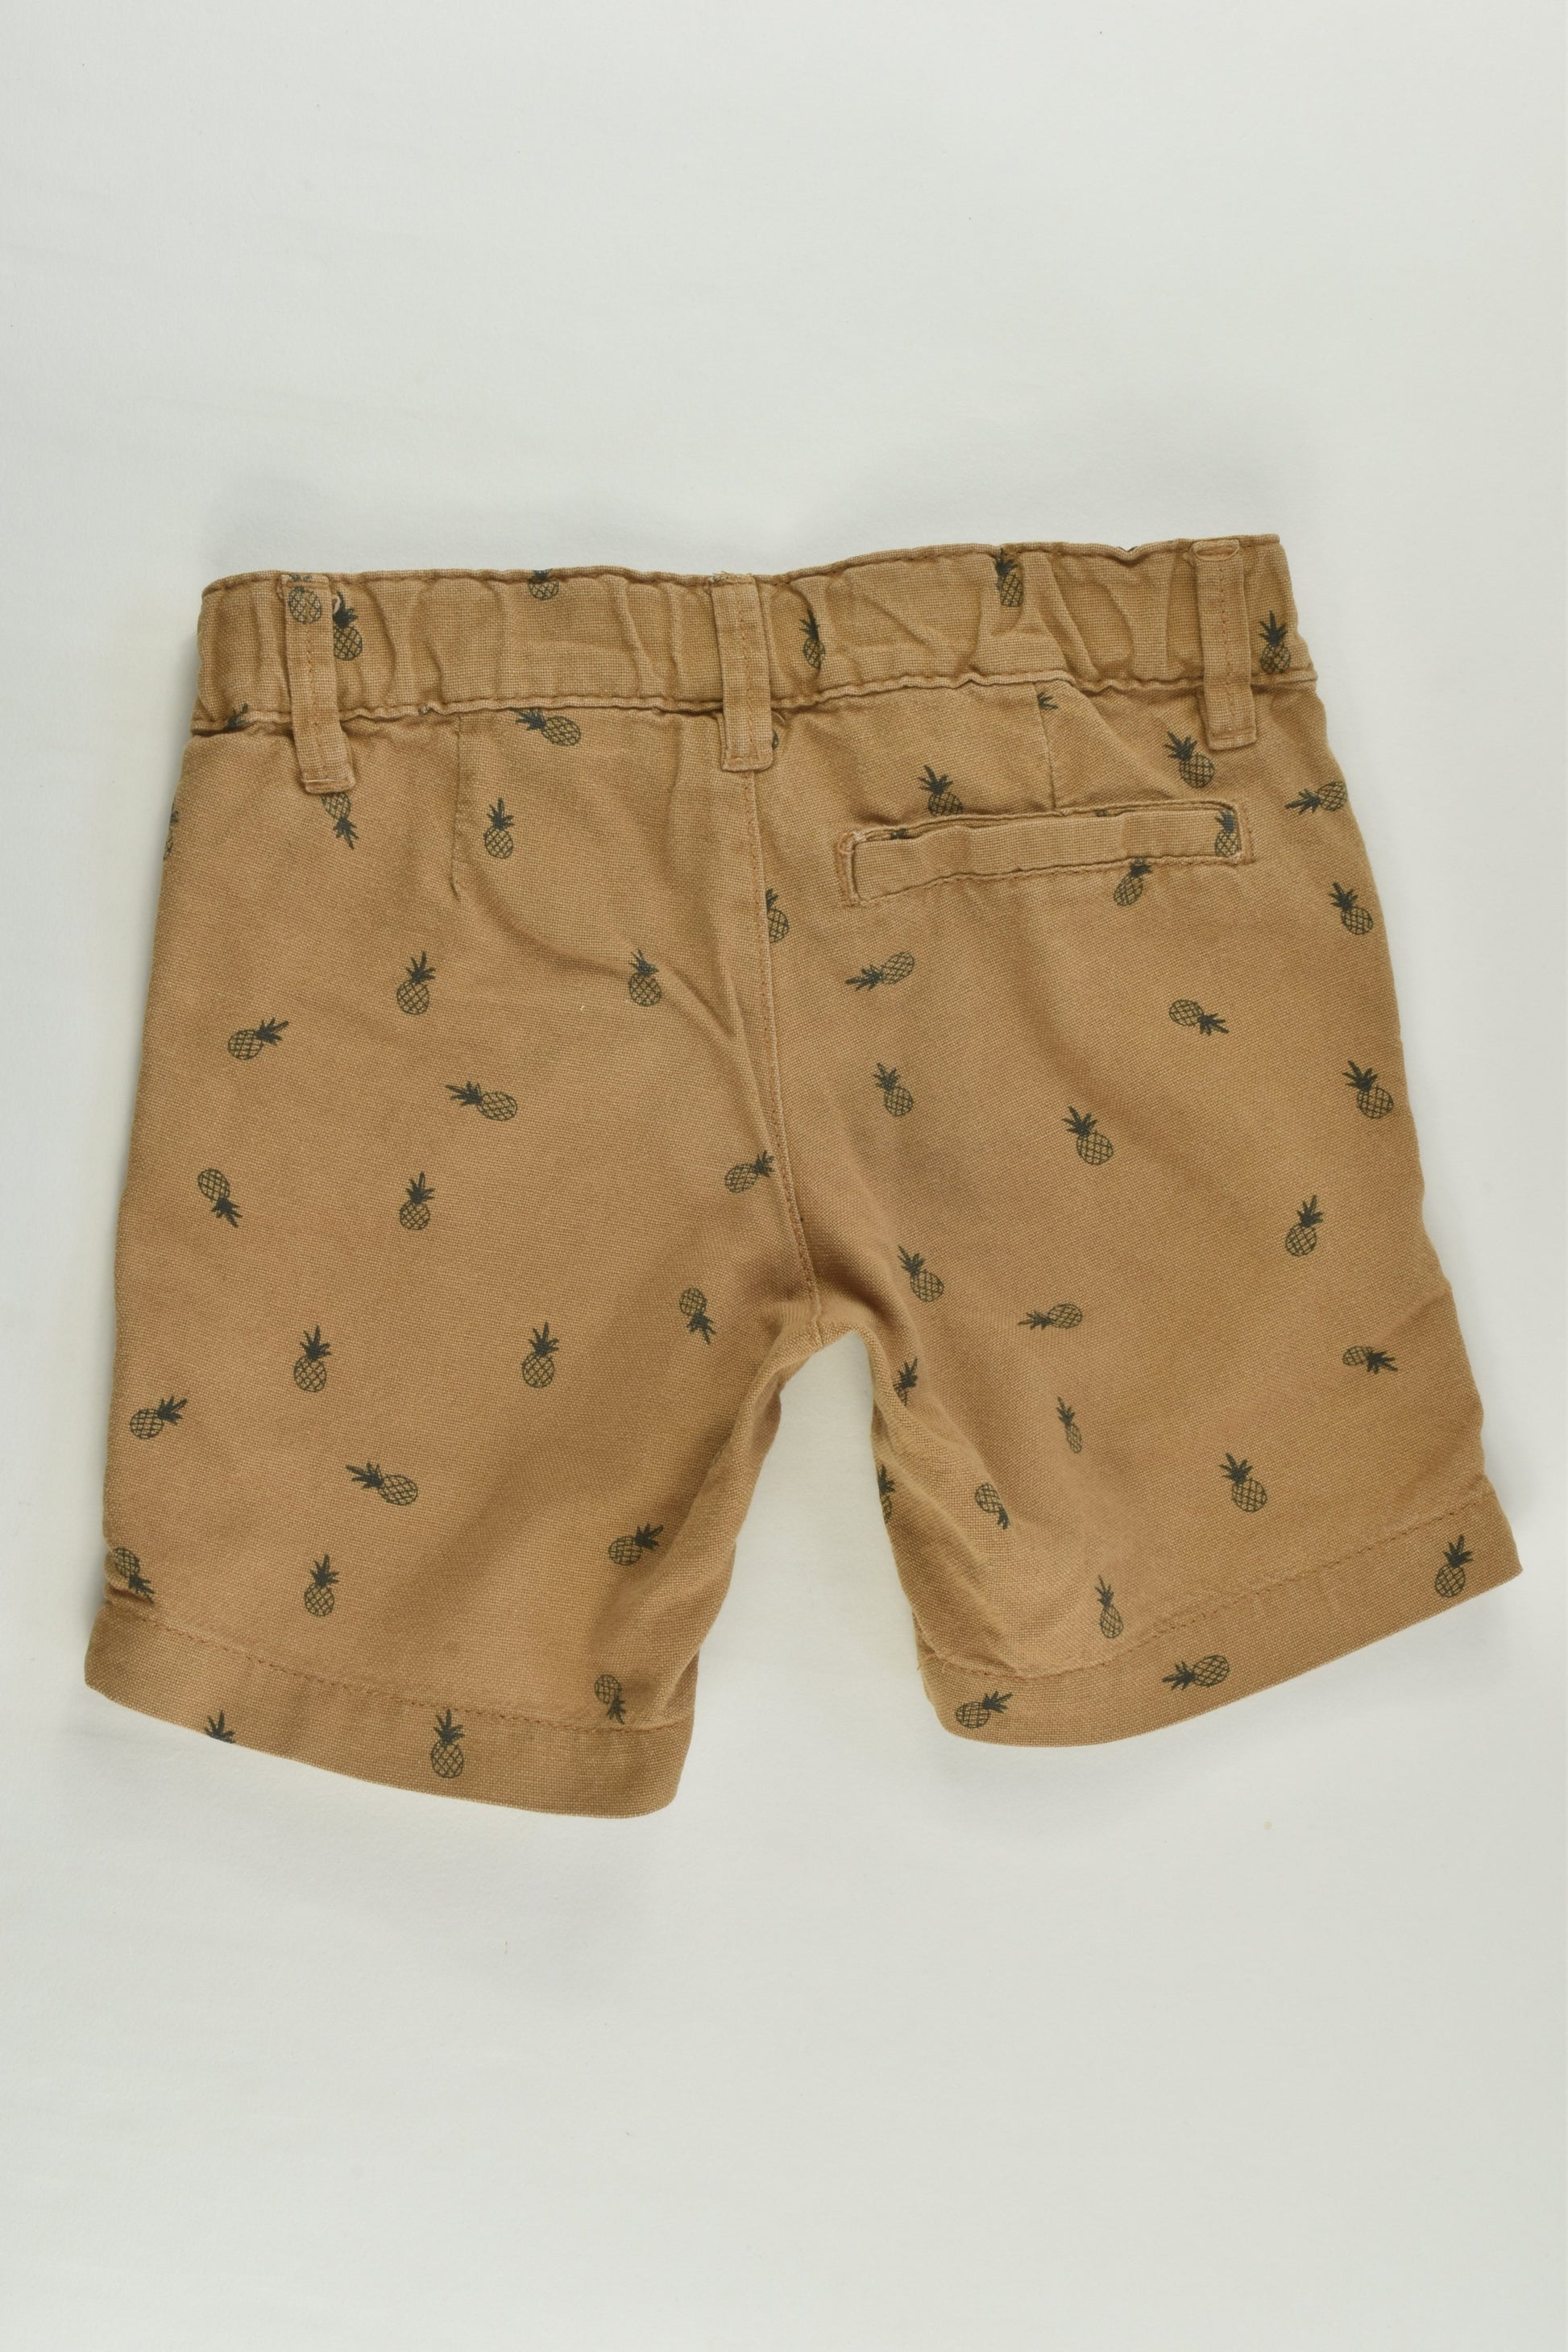 H&M Size 1 (86 cm) Pineapples Lightweight Shorts